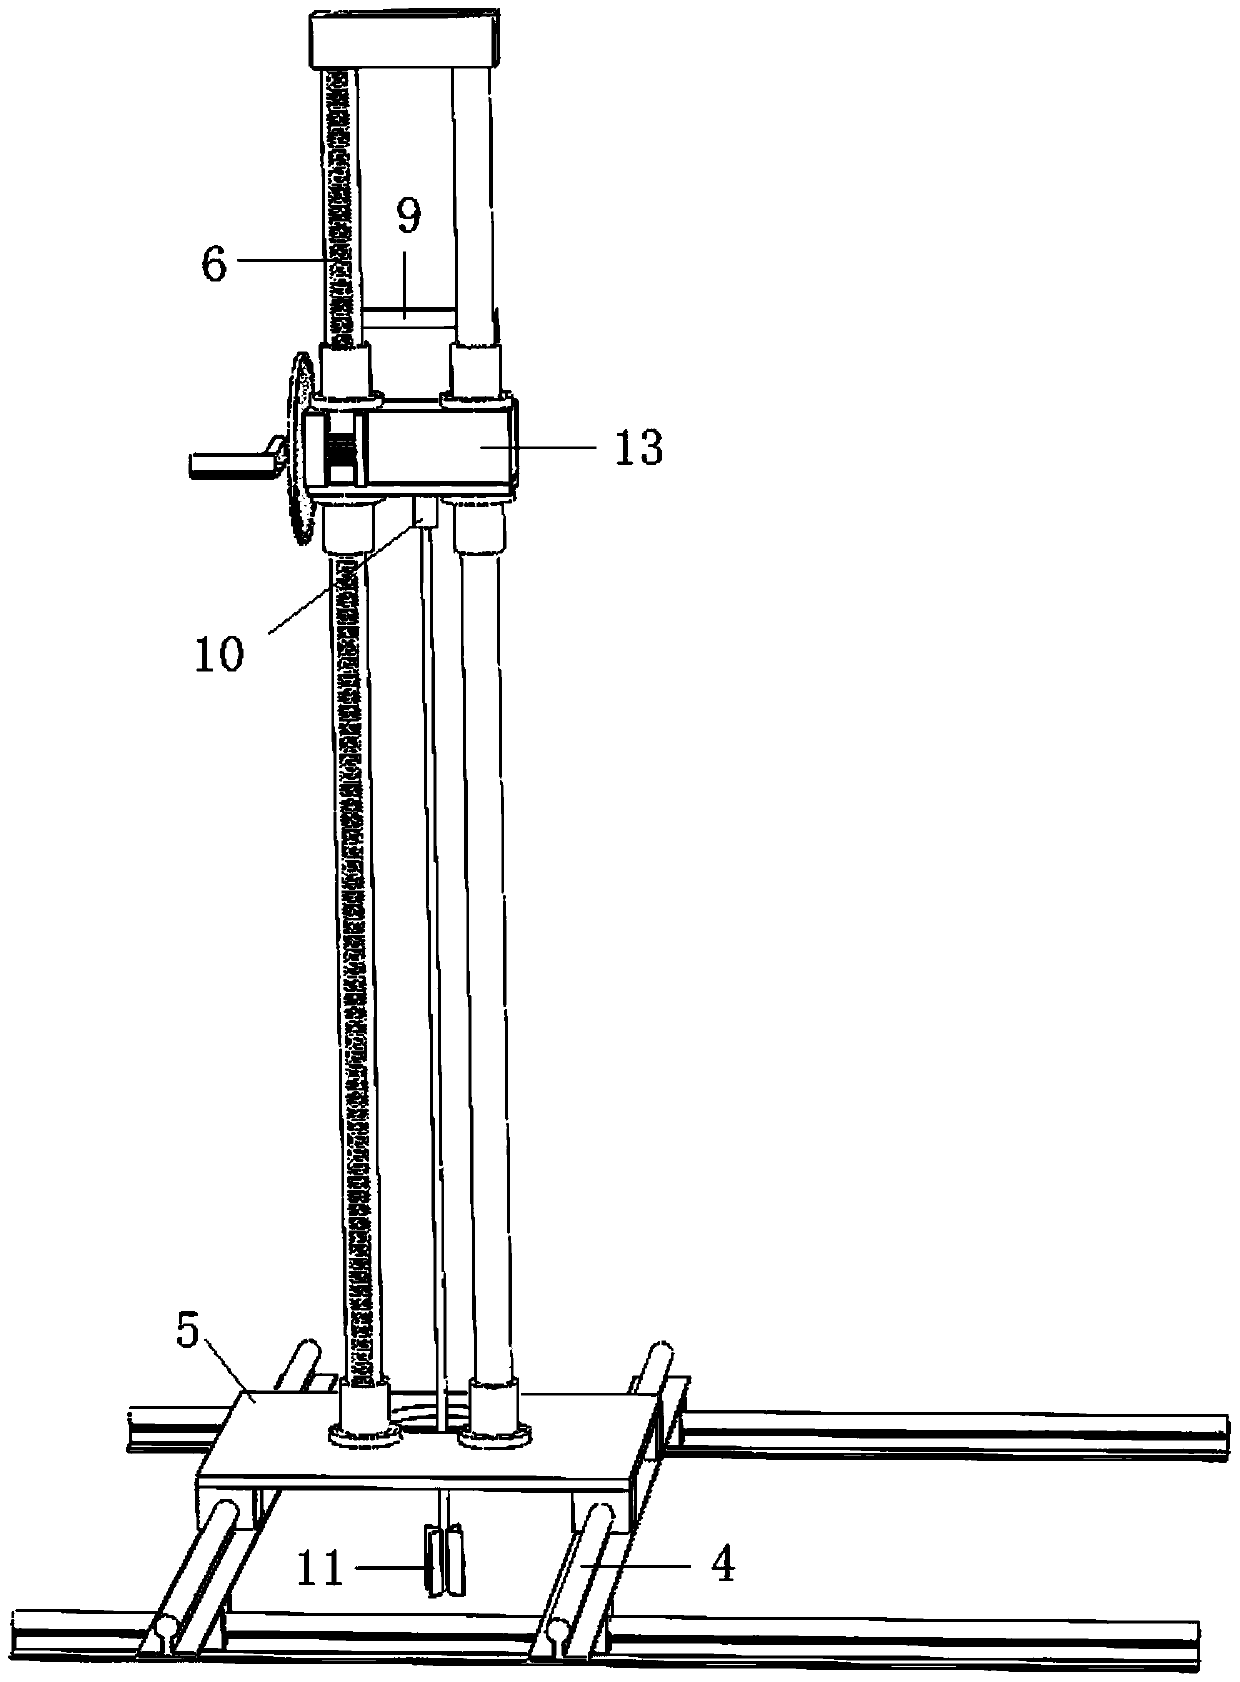 A box-type sampling shear strength test device